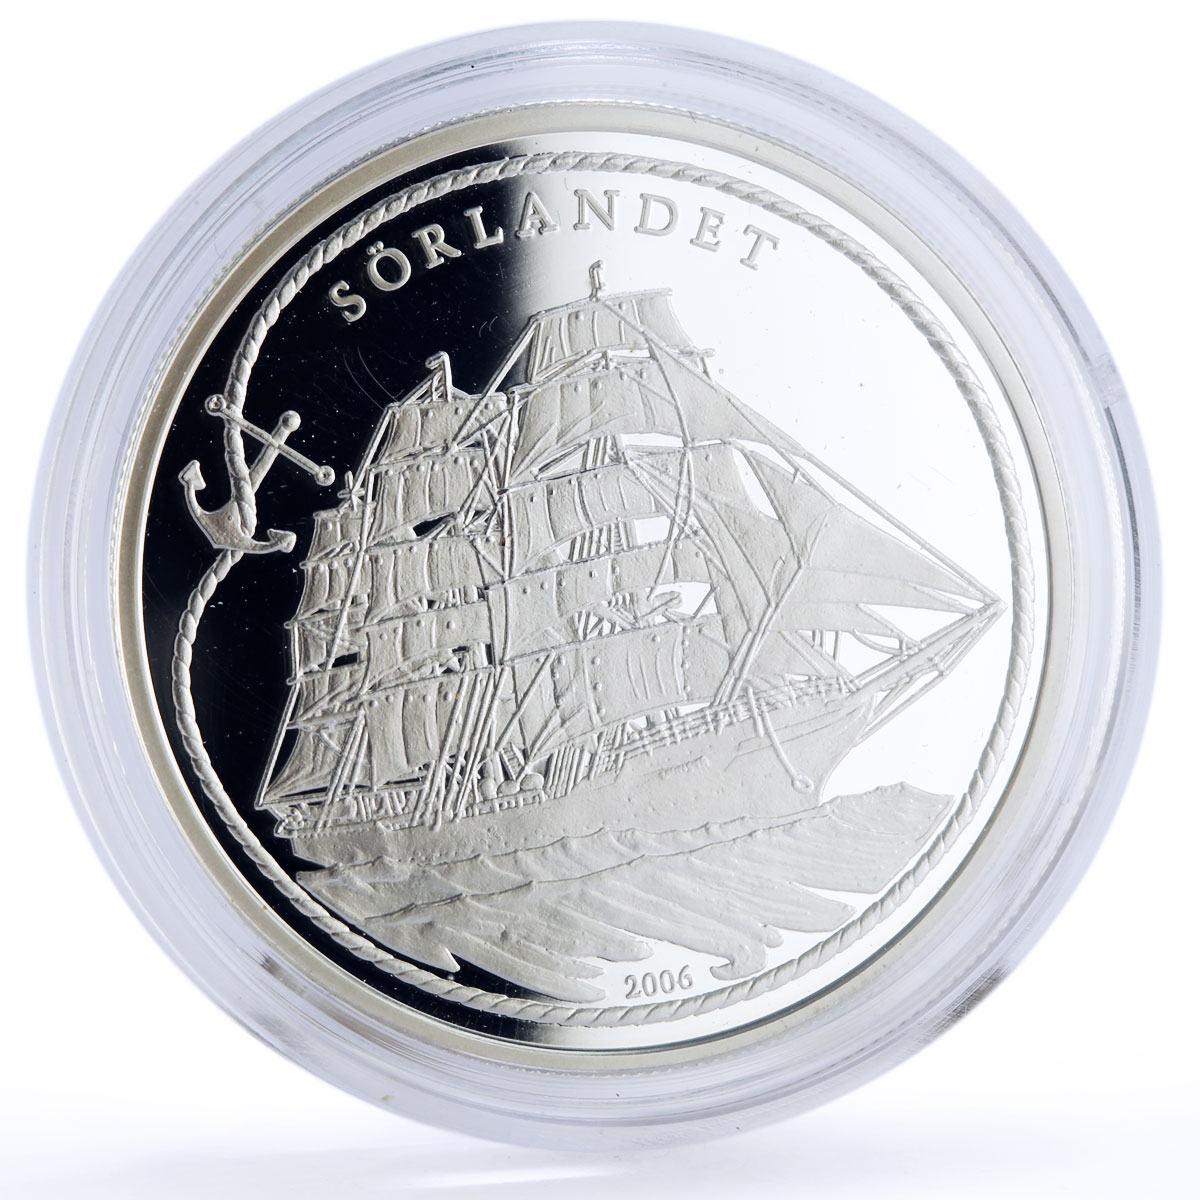 Benin 1000 francs Seafaring Sorlandet Ship Clipper proof silver coin 2006